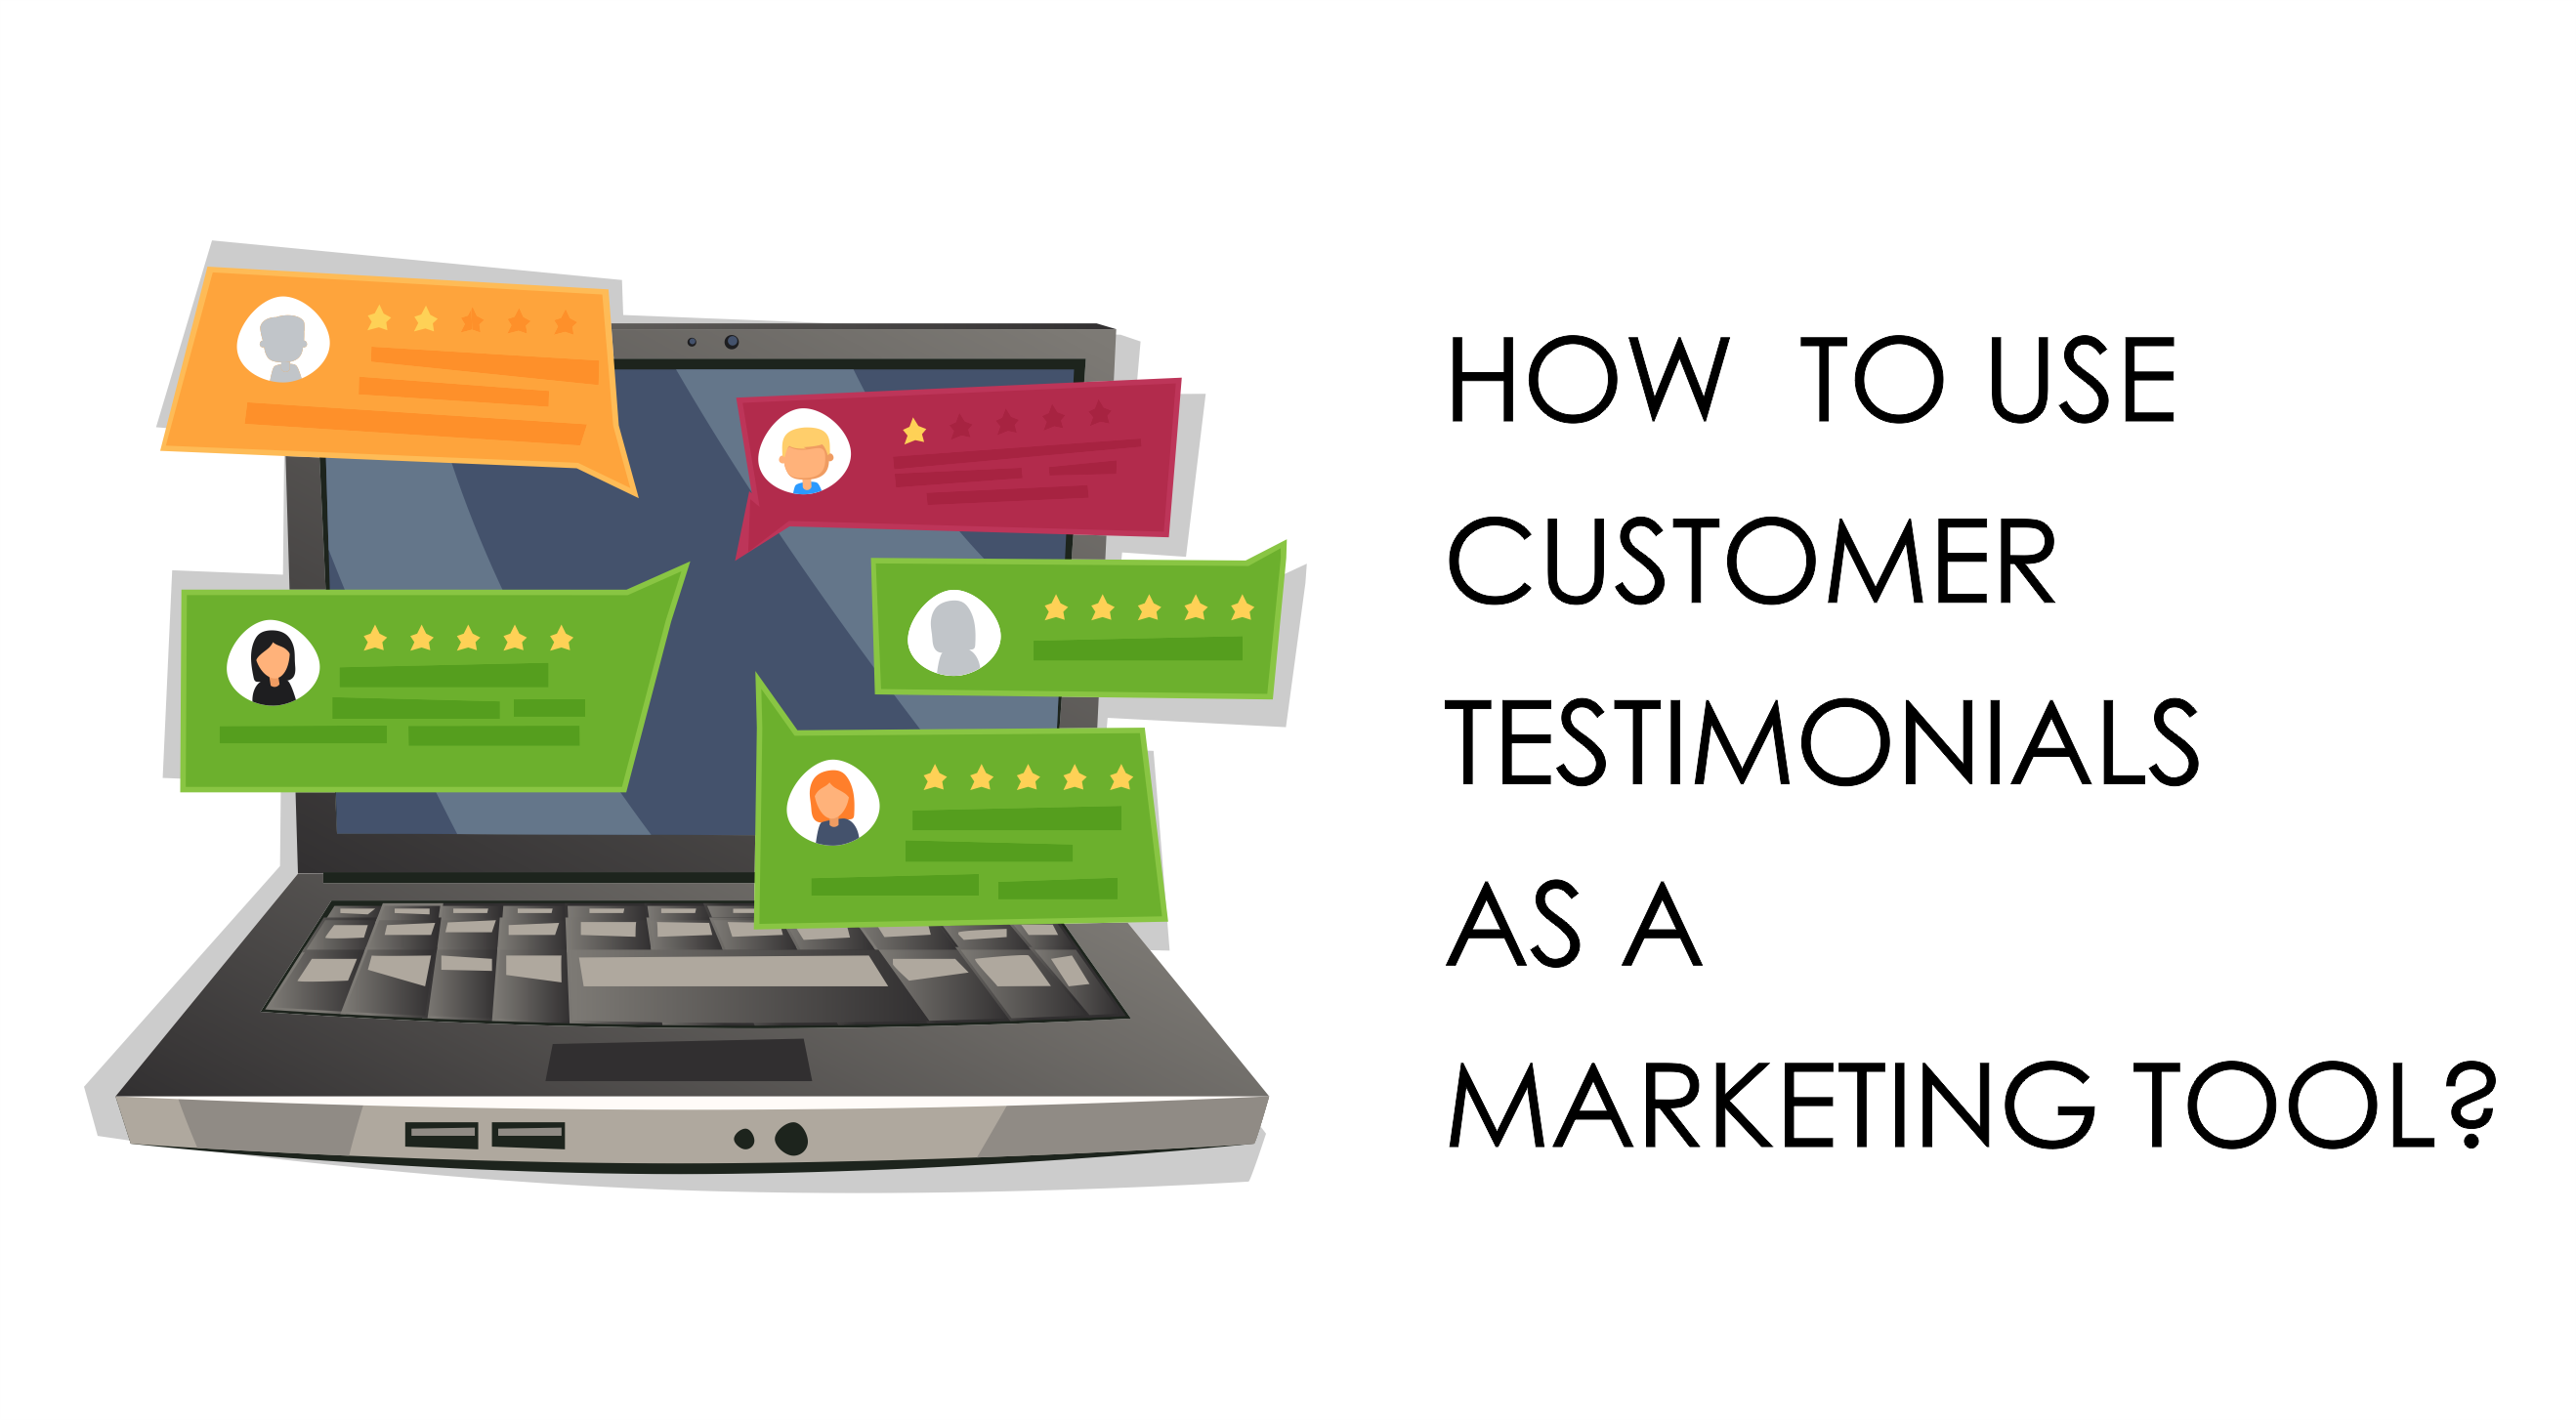 How to use customer testimonials as marketing tools?